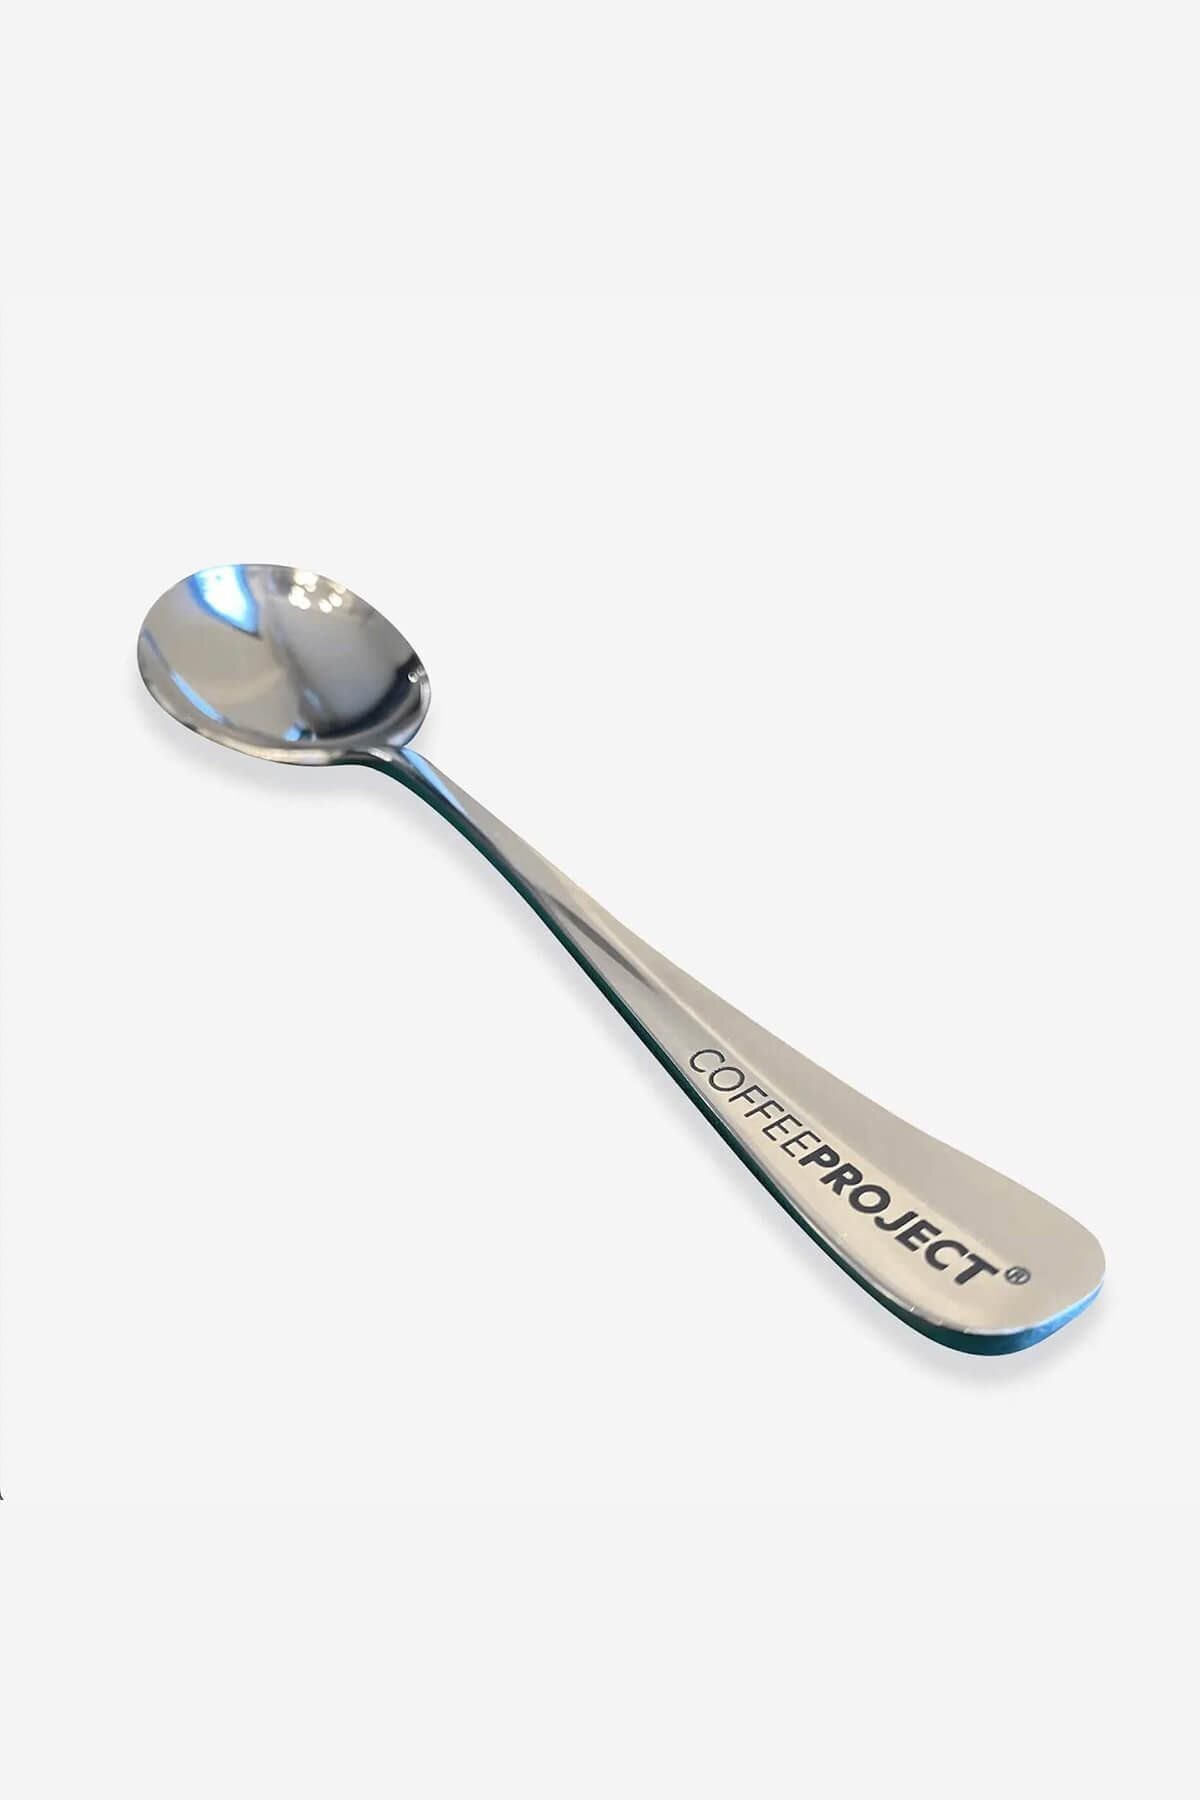 Coffee Project Kahve Tadım Kaşığı | Cupping Spoon